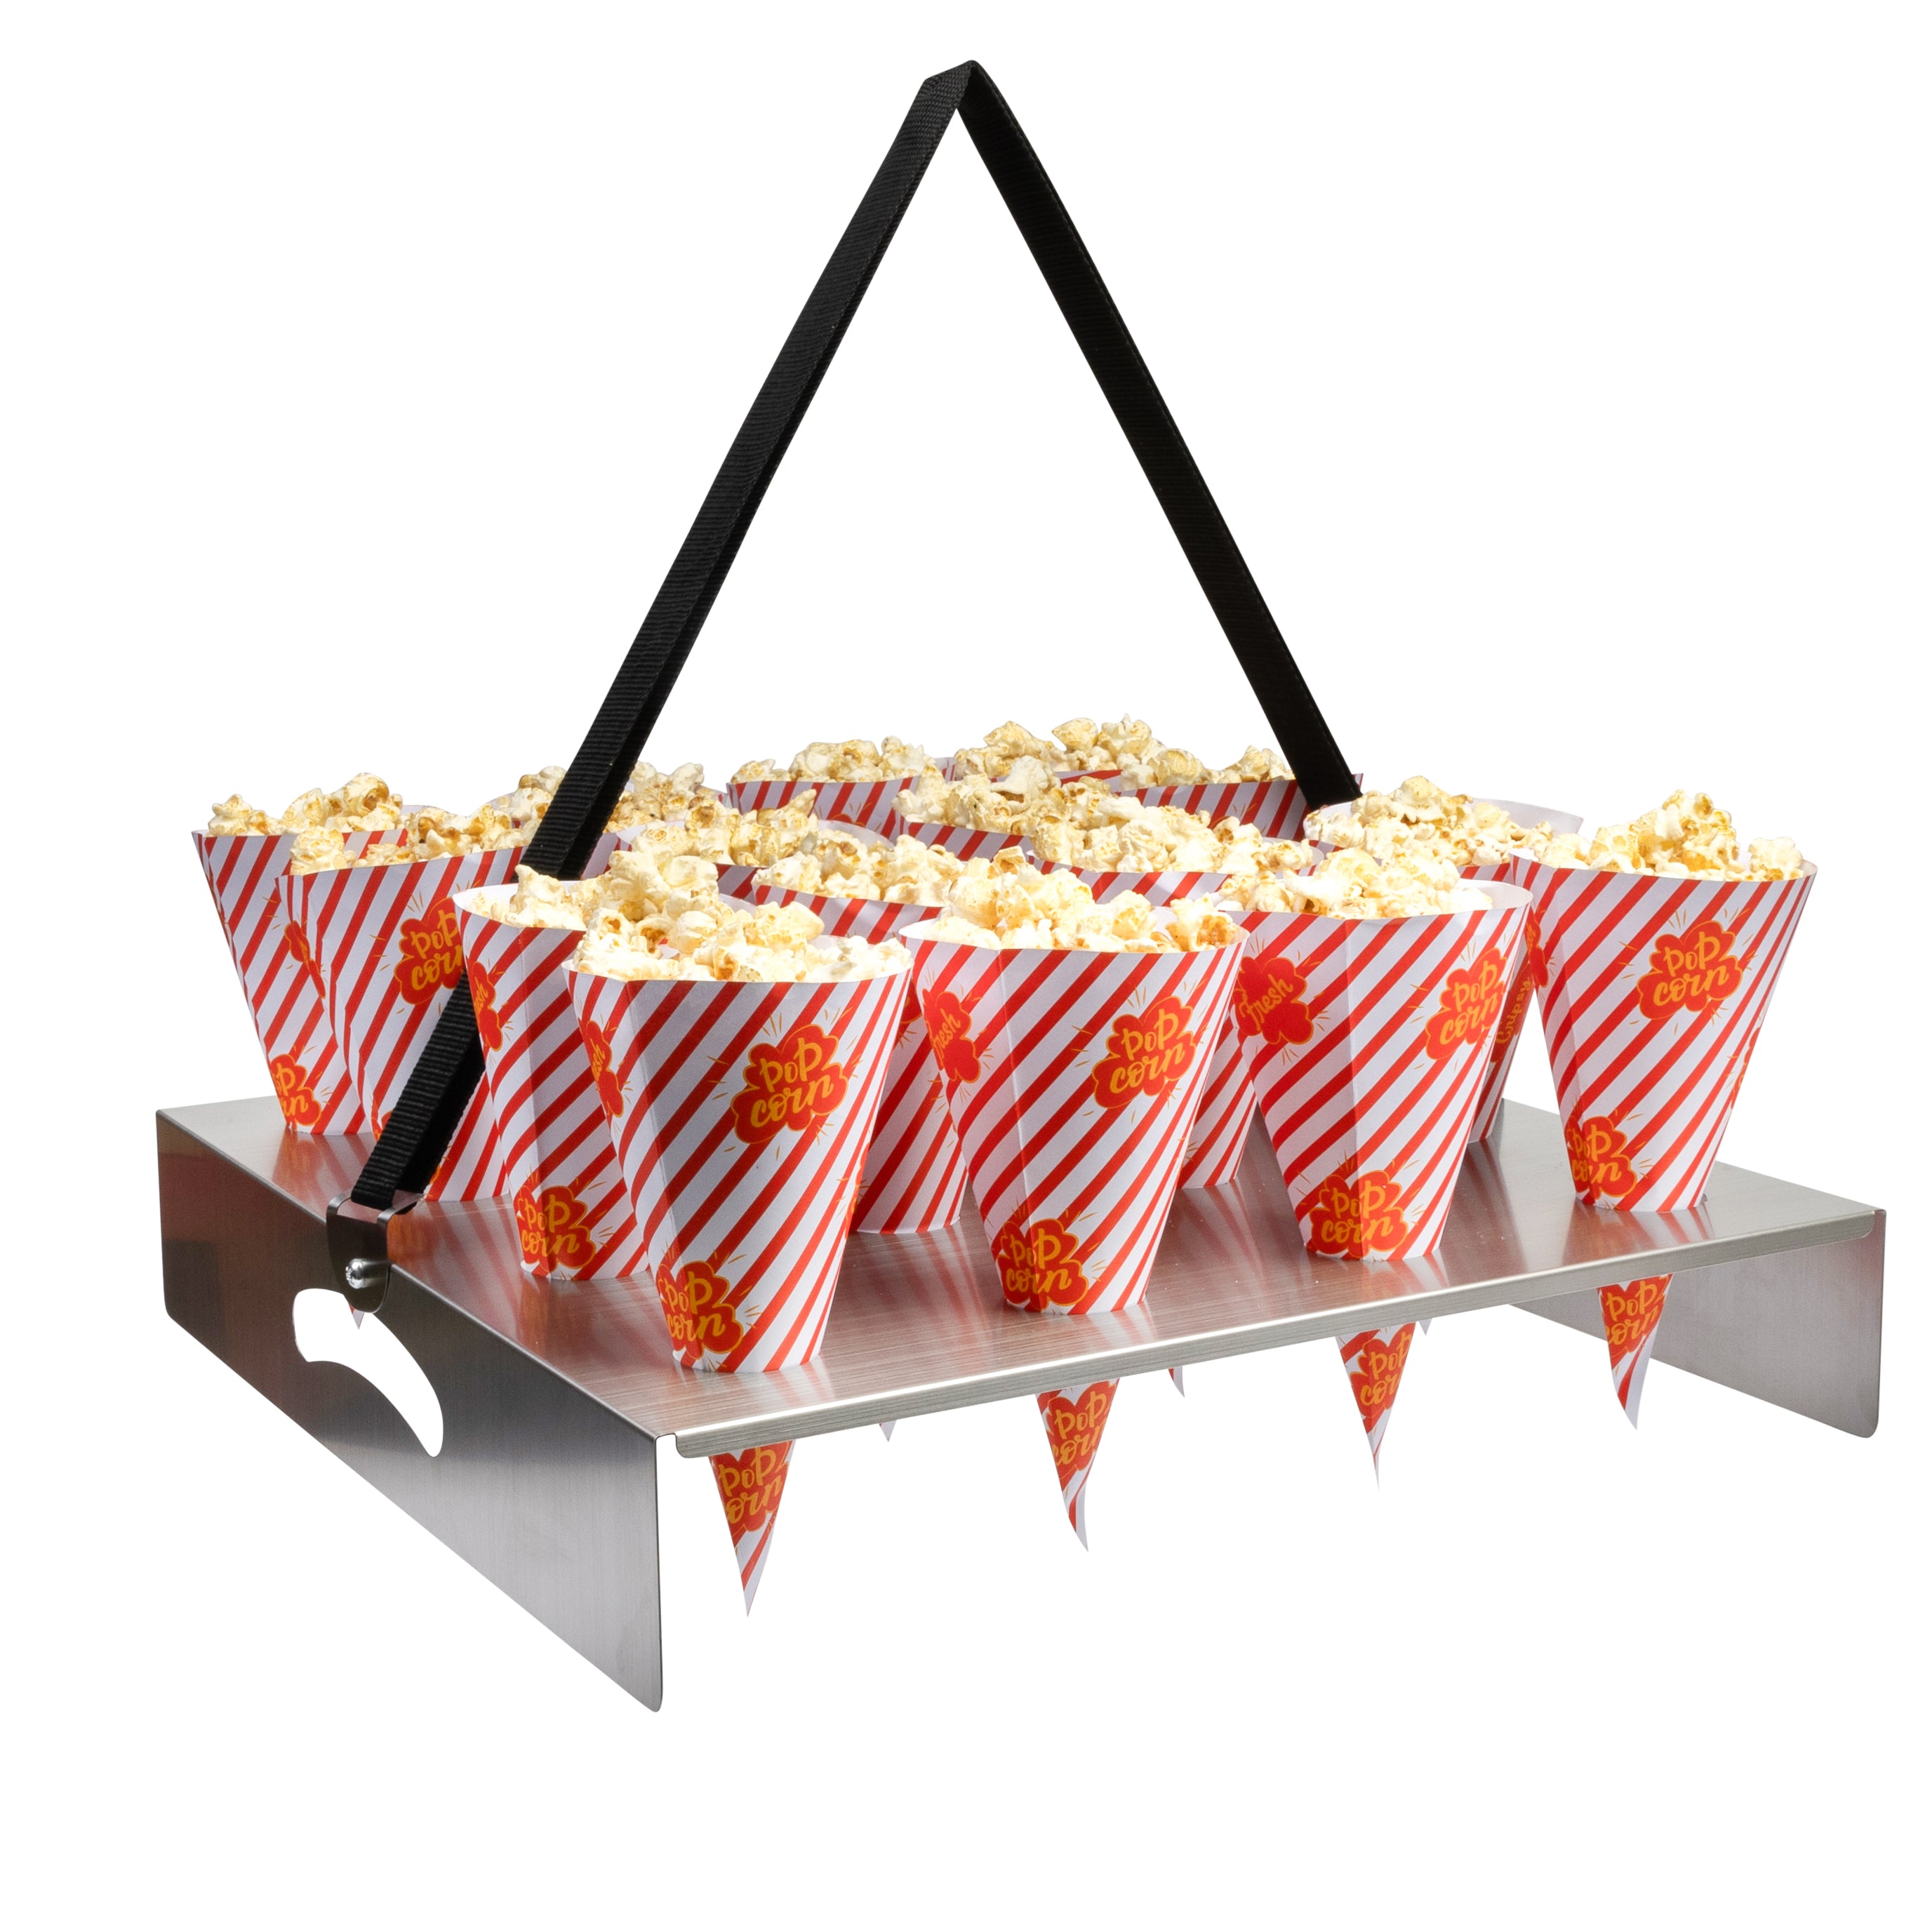 Popcorn cone holder